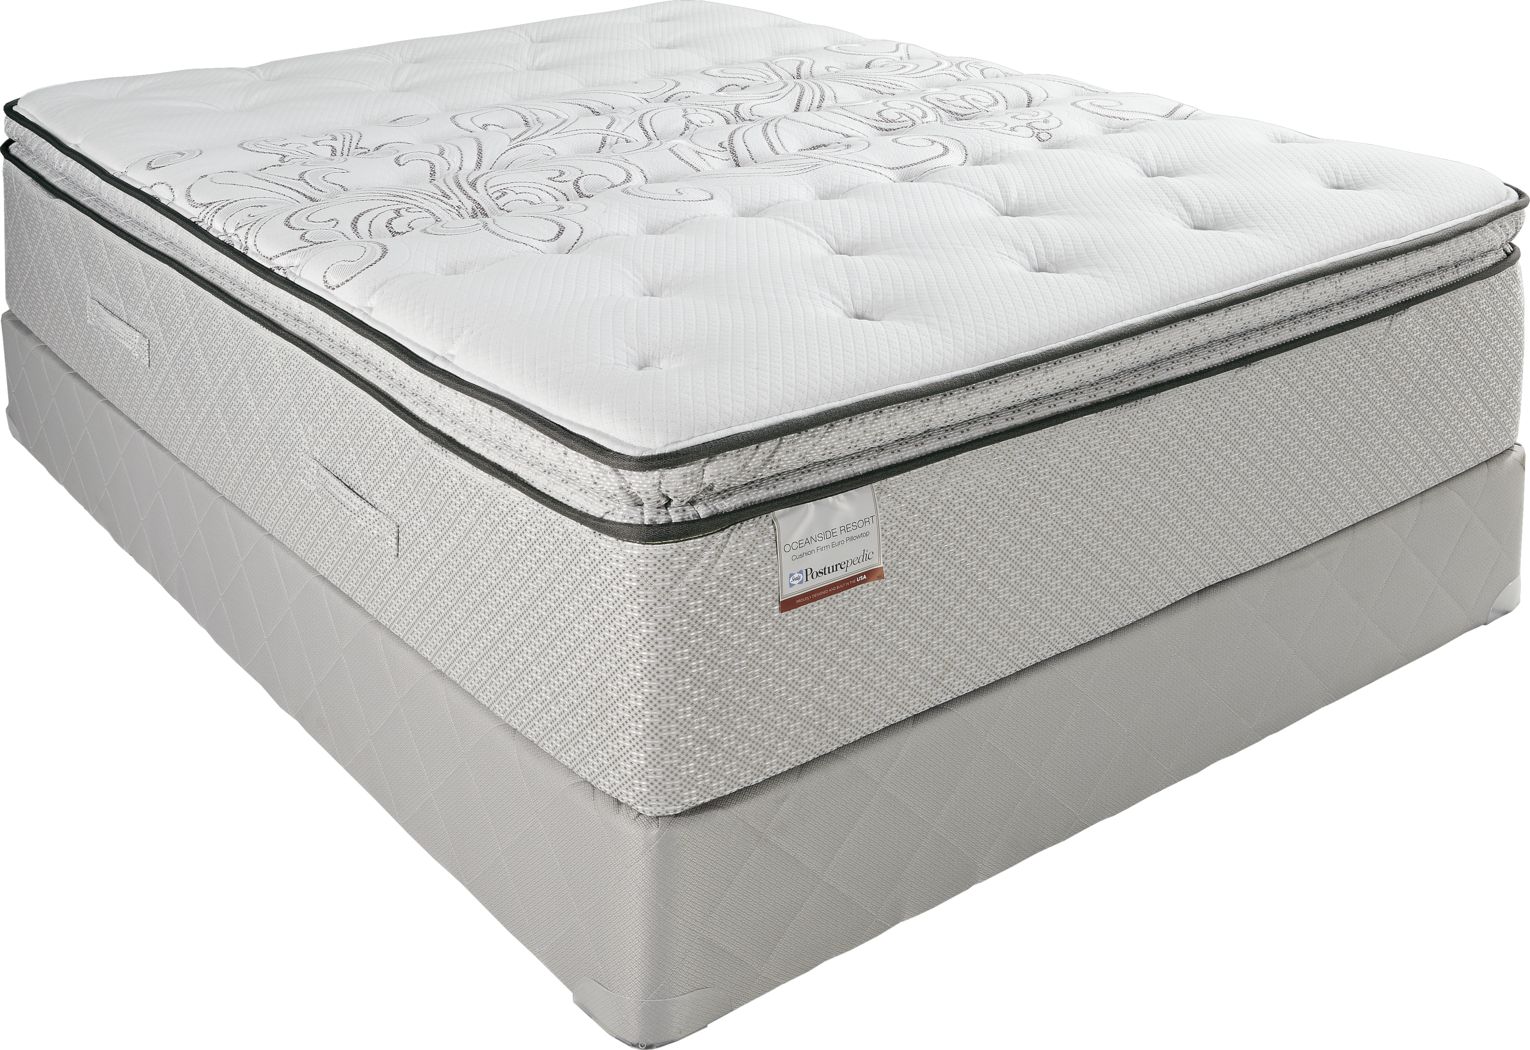 sealy queen mattress set price